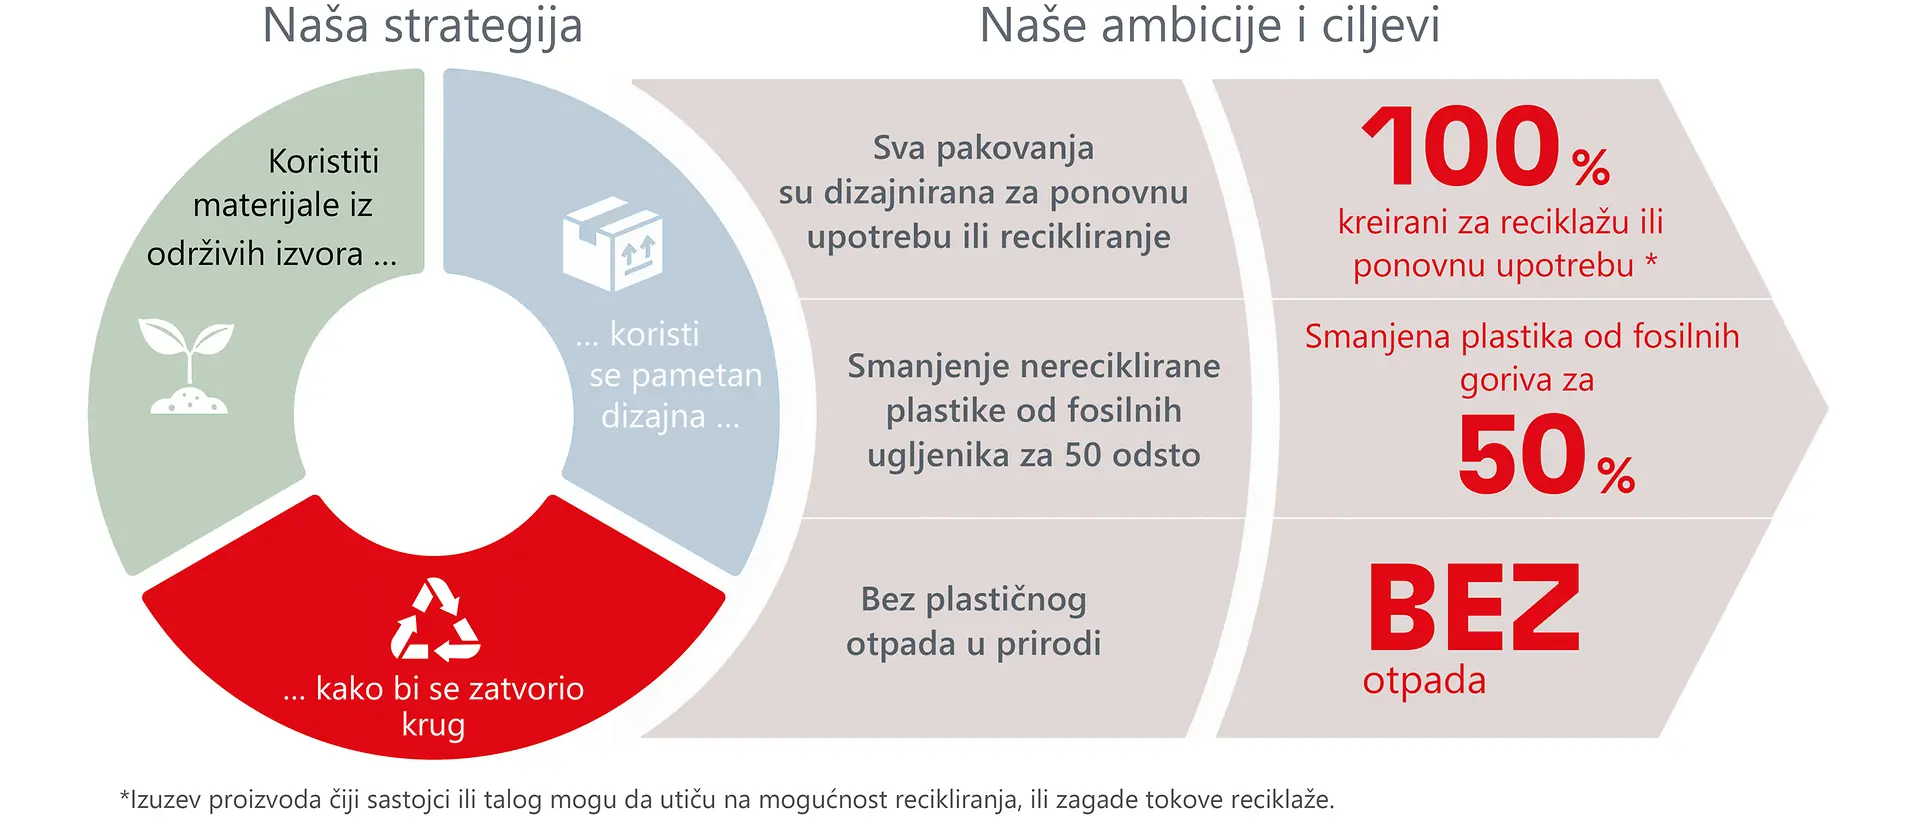 sustainability-packaging-strategy-strategija-odrziva-ambalaza-rs